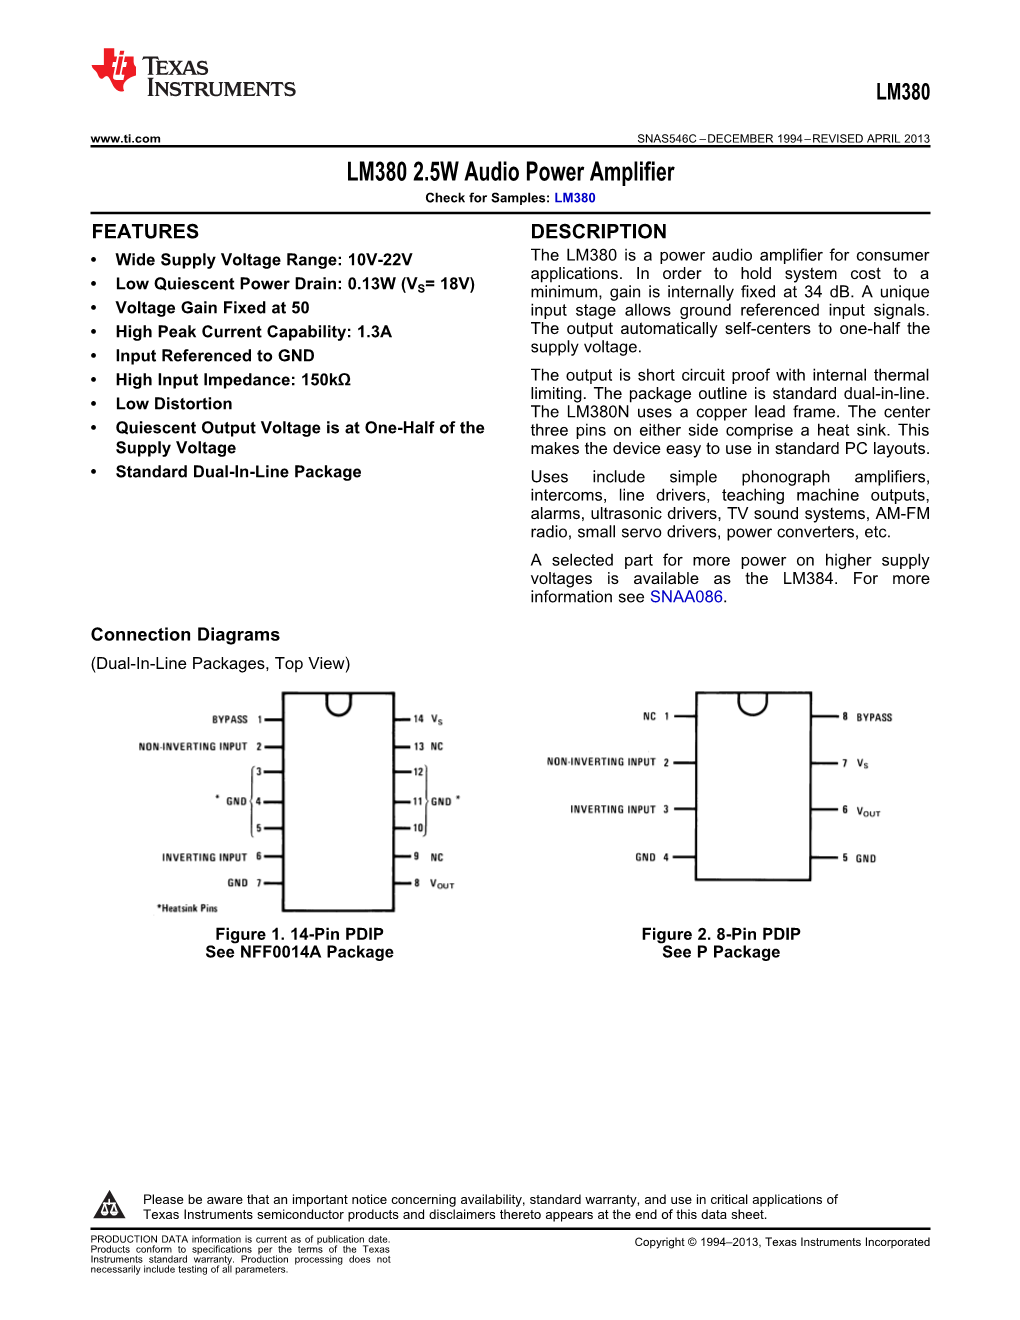 LM380 2.5W Audio Power Amplifier Datasheet (Rev. C)